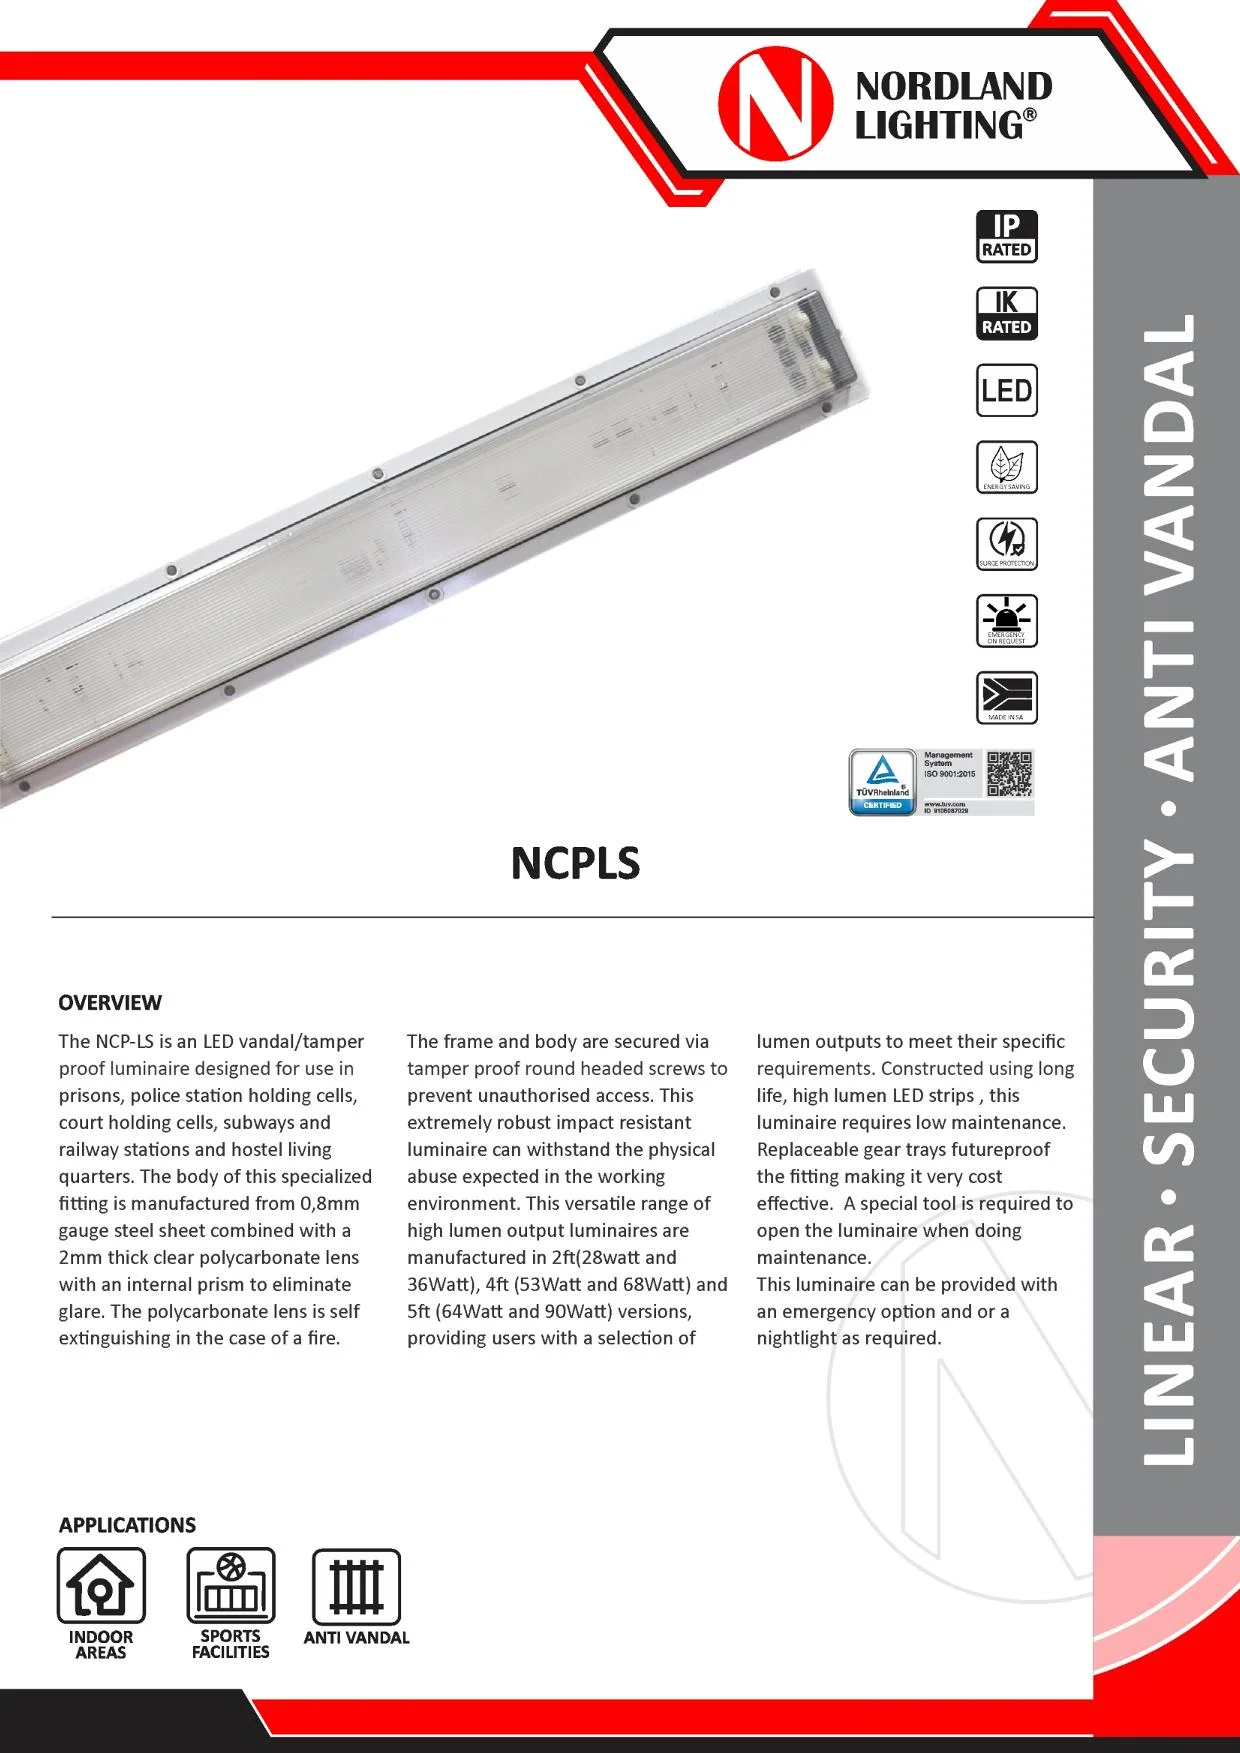 NL33 Nordland NCPLS LED Vandal Proof Luminaire